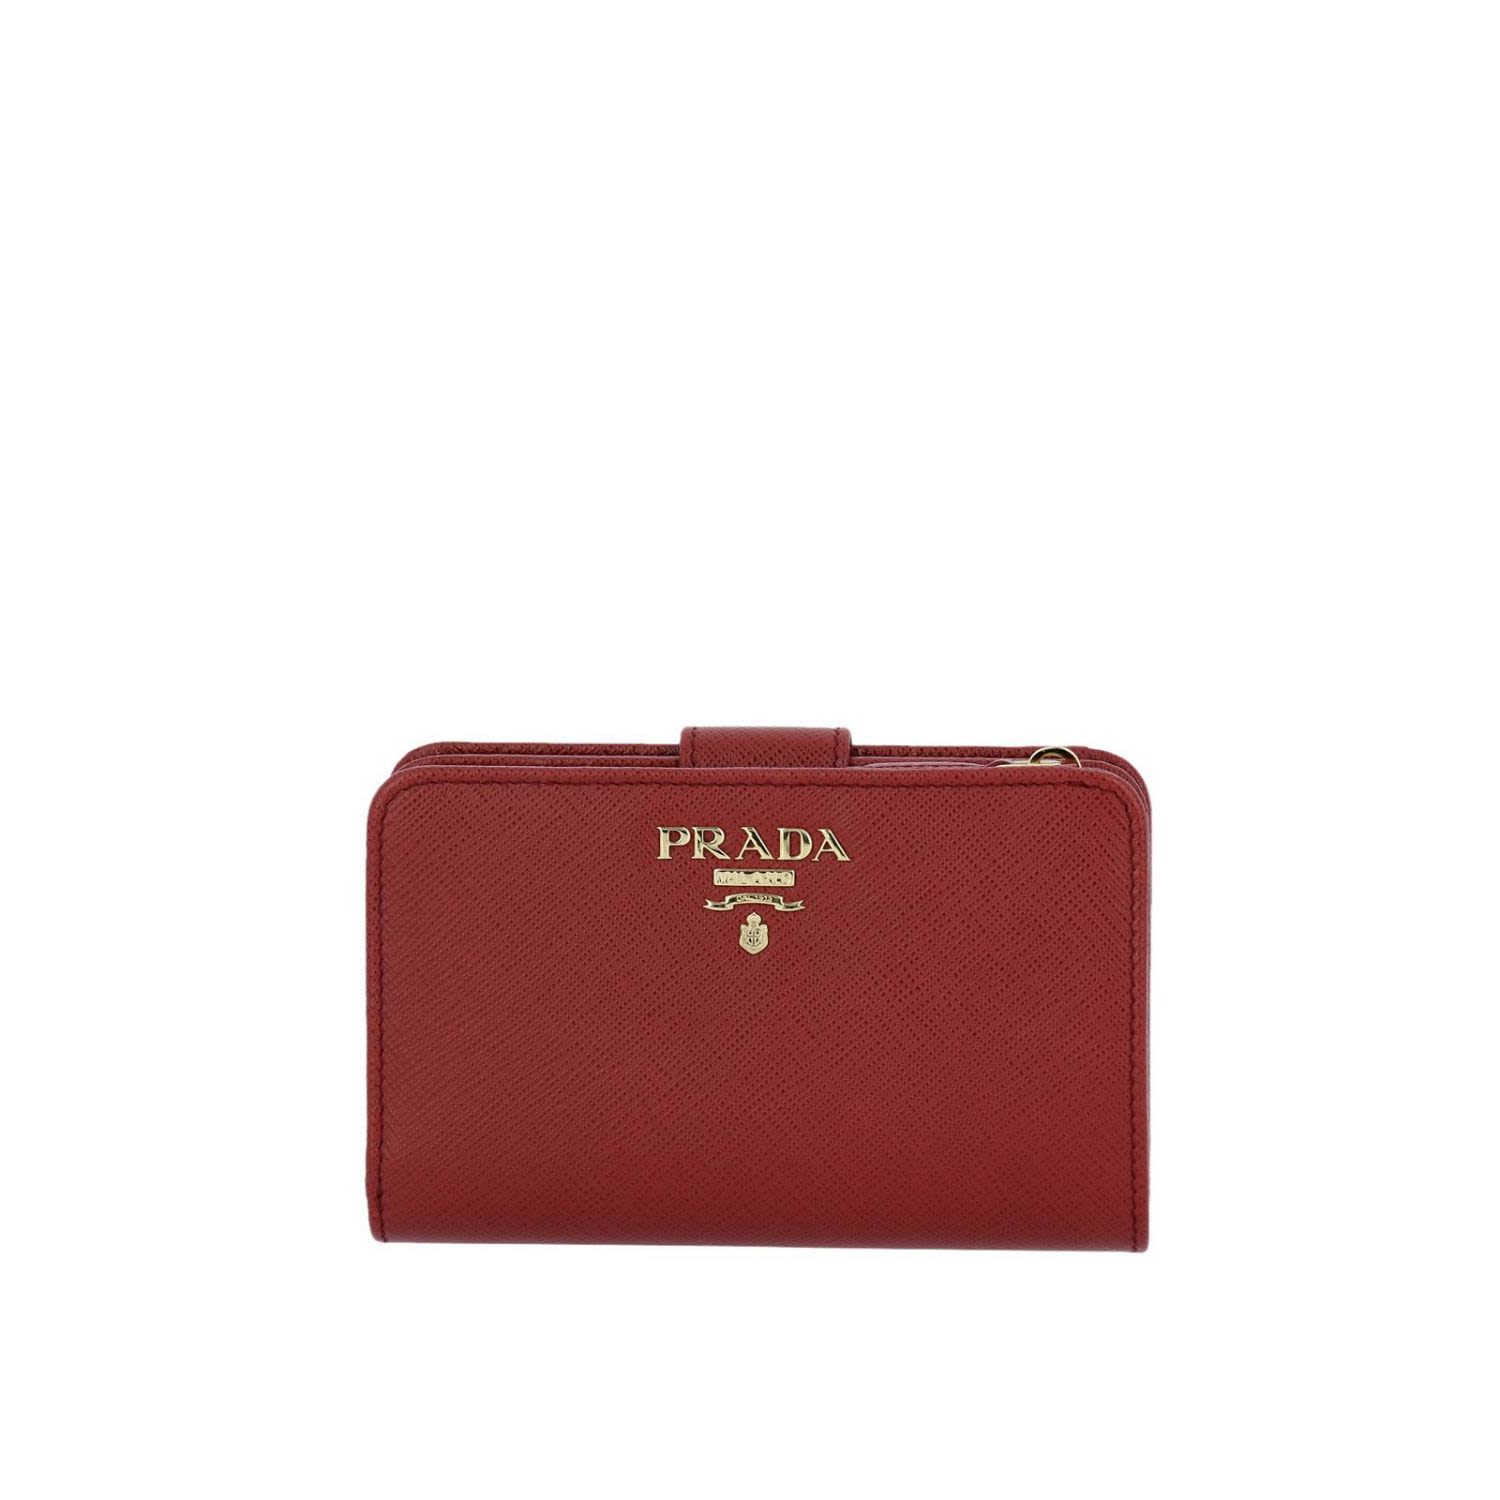 italist | Best price in the market for Prada Wallet Wallet Women Prada - red - 10678393 | italist